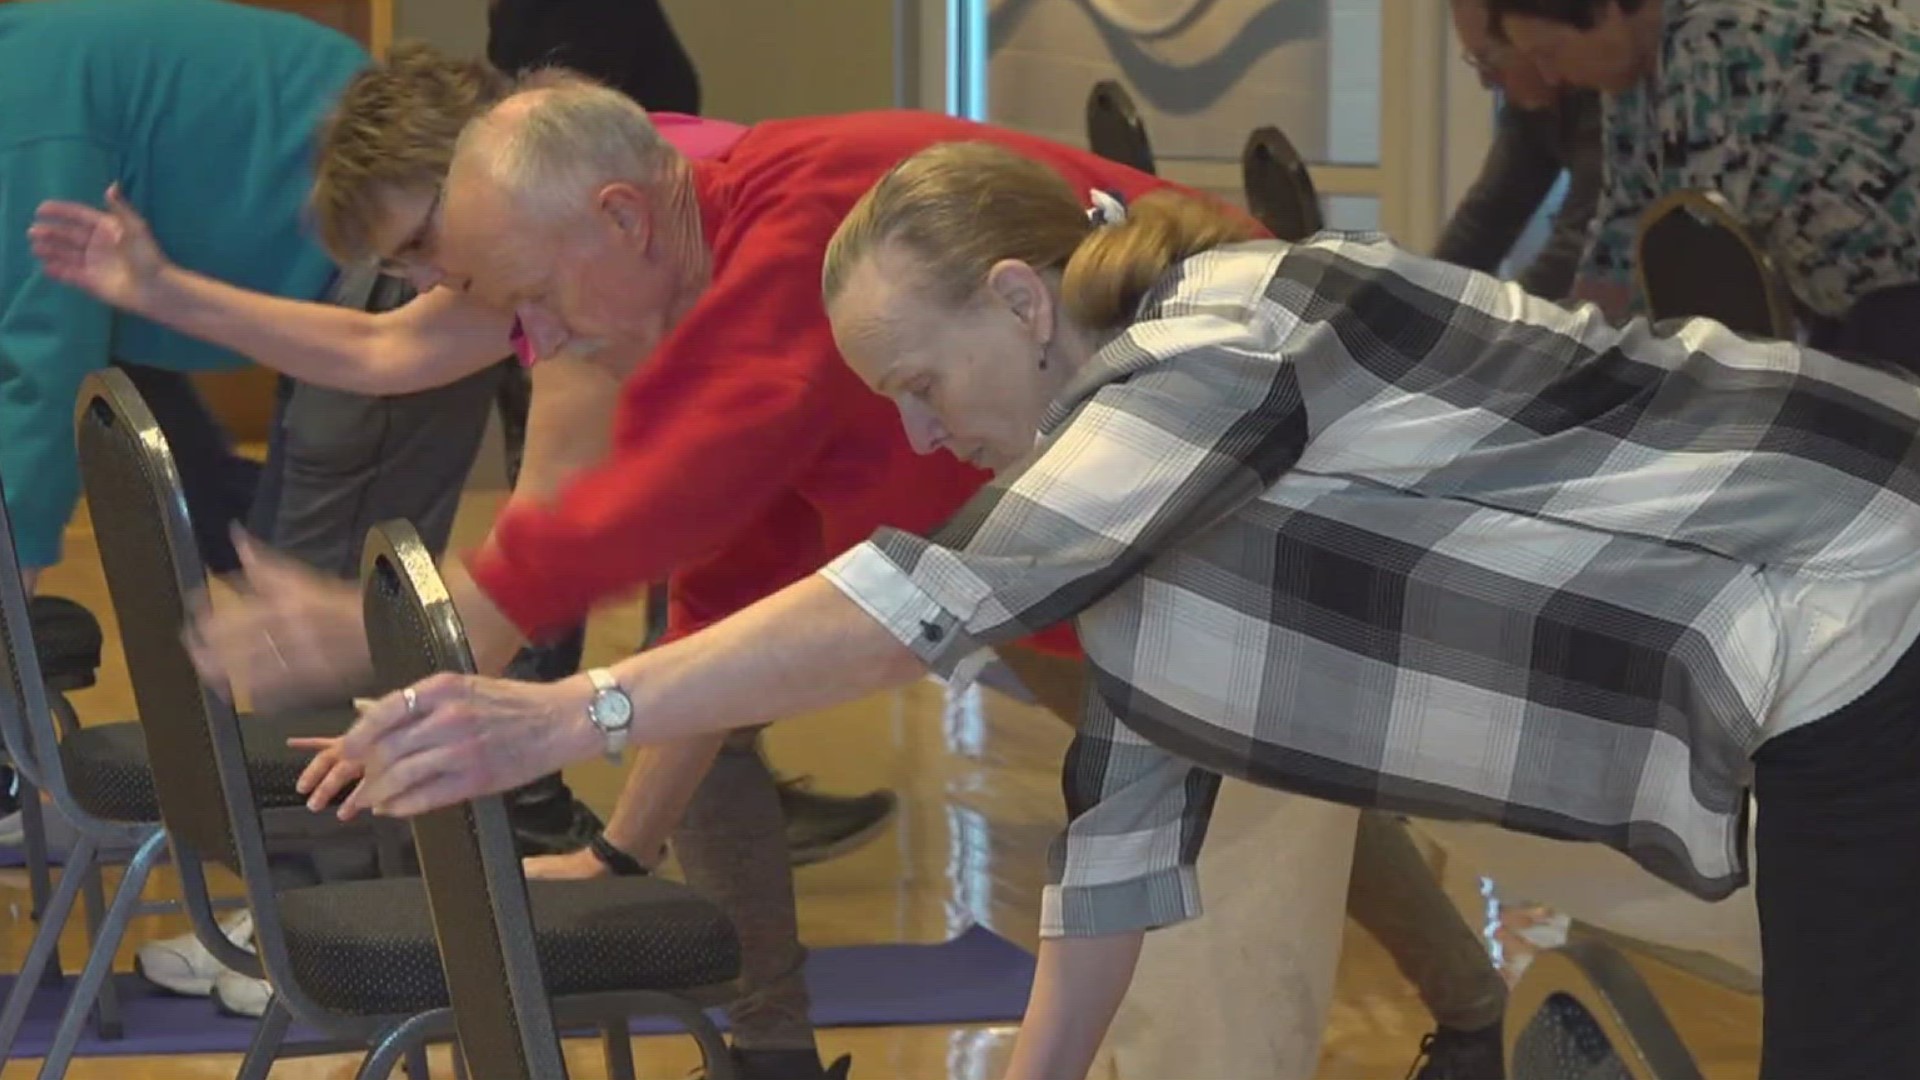 York JCC's Momentum program keeps seniors' minds and bodies active.